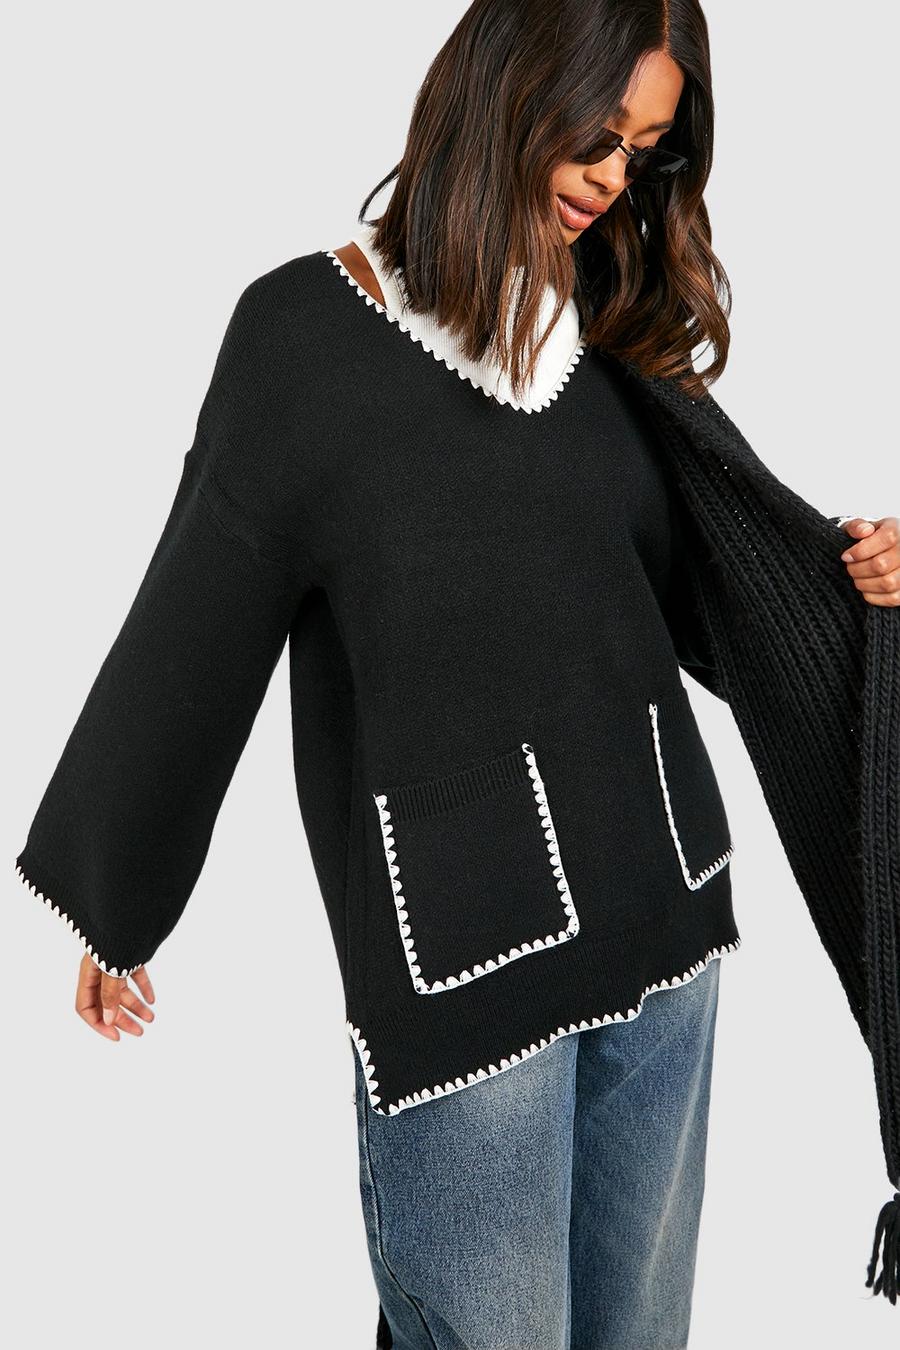 Black Contrast Stitch Sweater